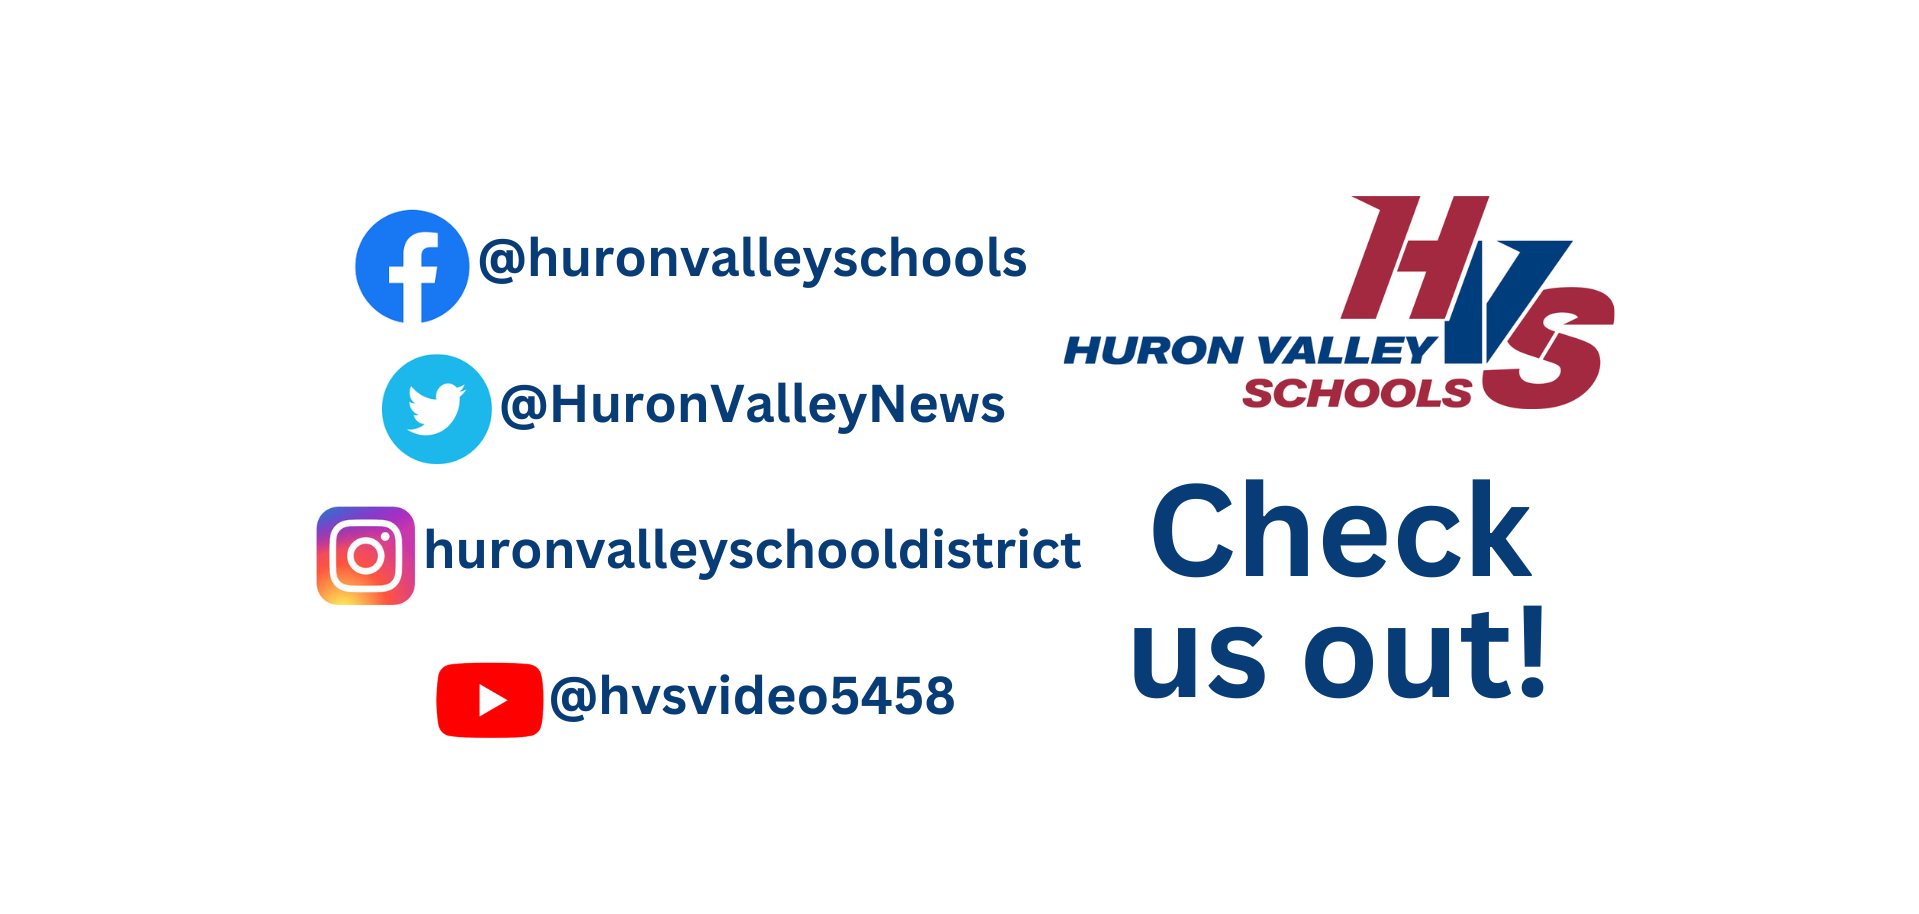 Huron Valley School social media Facebook @huronvalleyschools Twittter @HuronValleyNews Instagram huronvalleyschooldistrict Youtube @hvsvideo5458